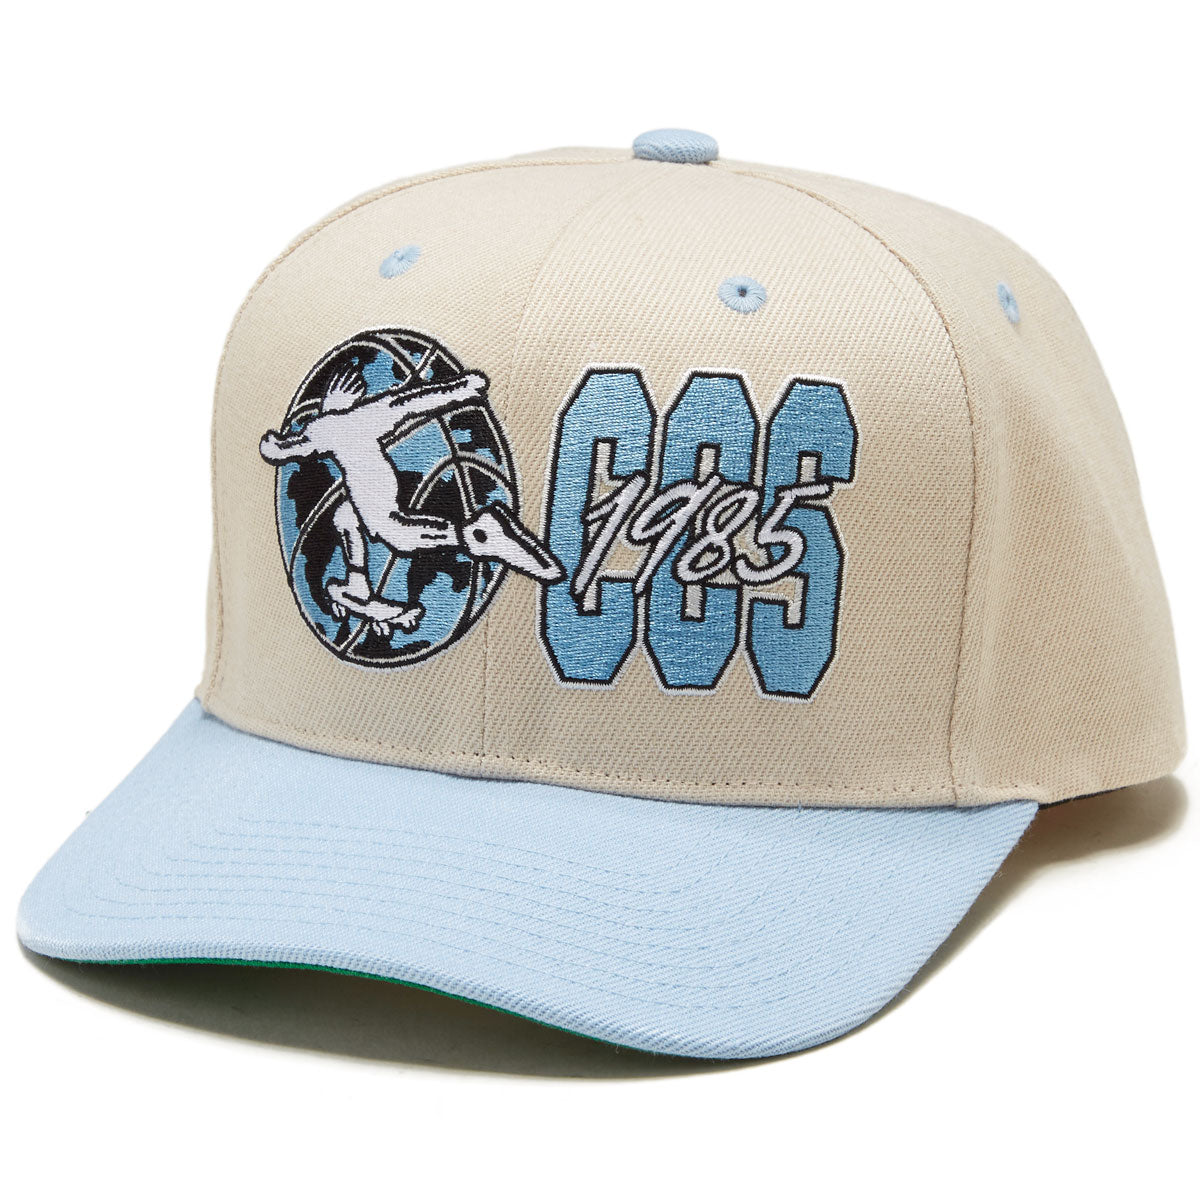 CCS x Mitchell & Ness Hoops Hat - Cream/Light Blue image 1